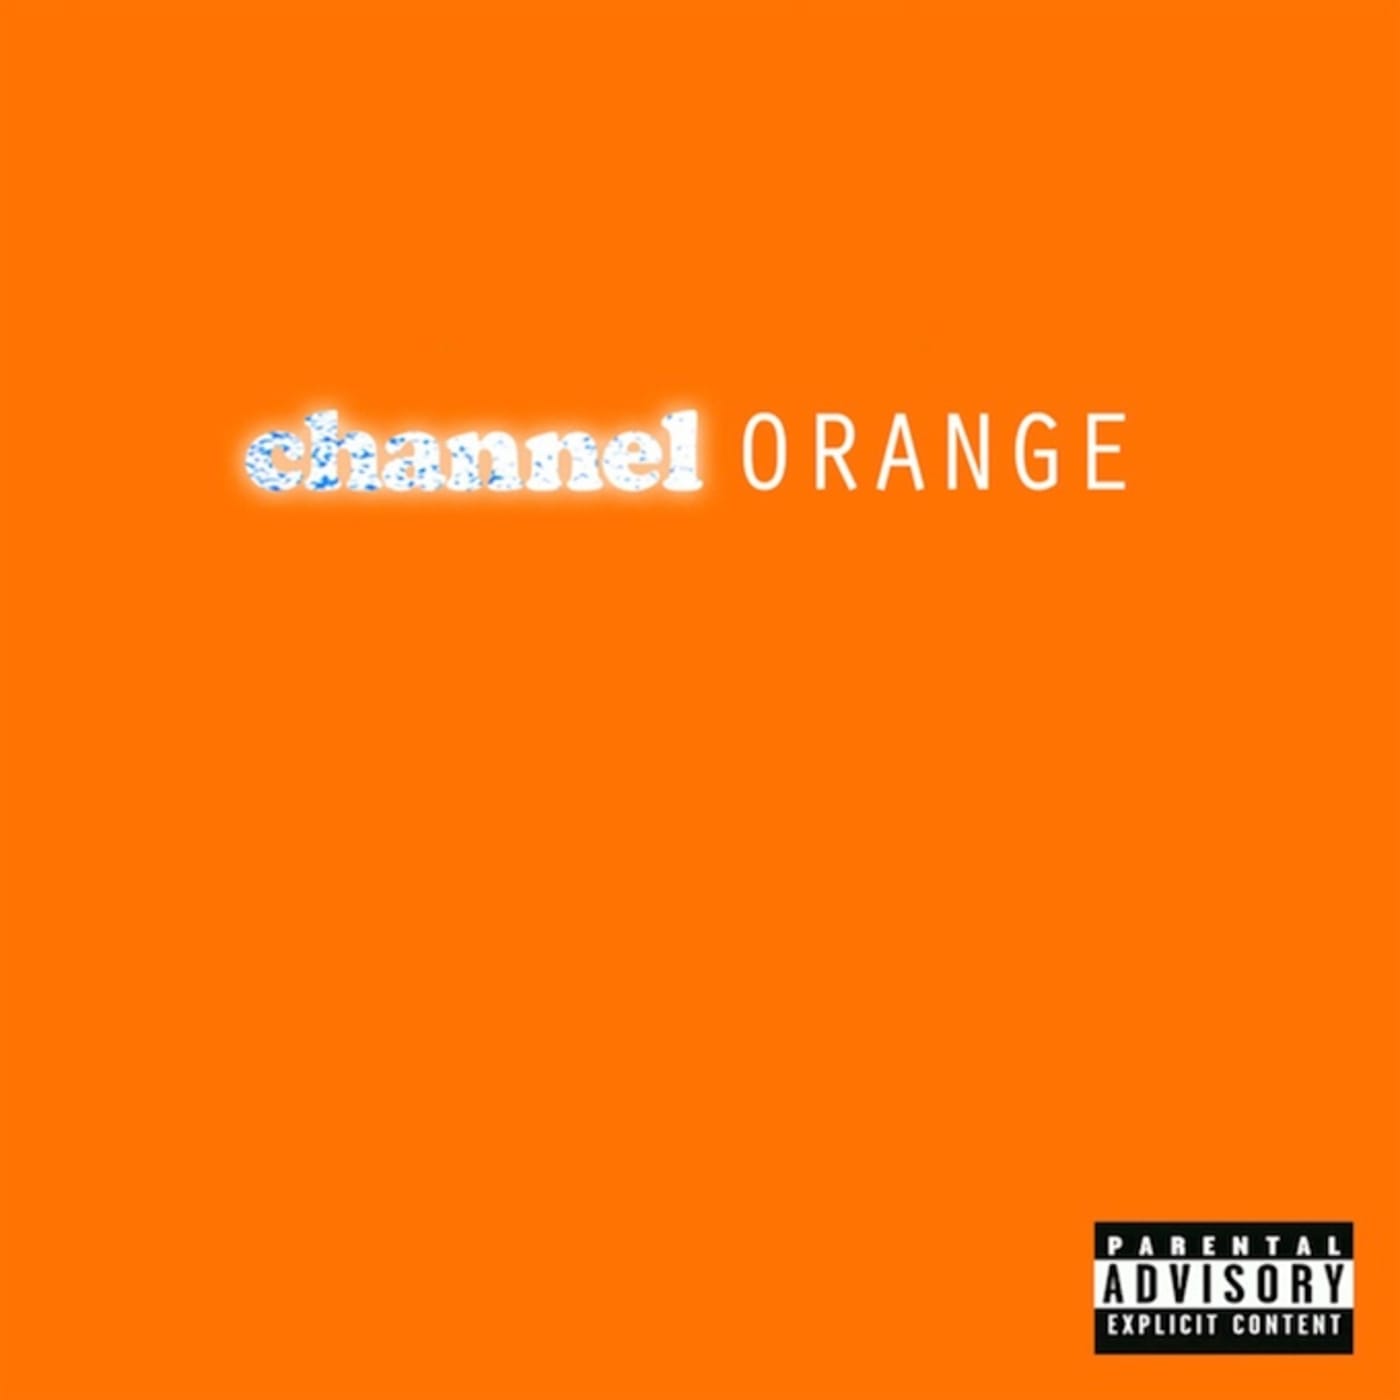 Frank Ocean 'Channel Orange' cover art